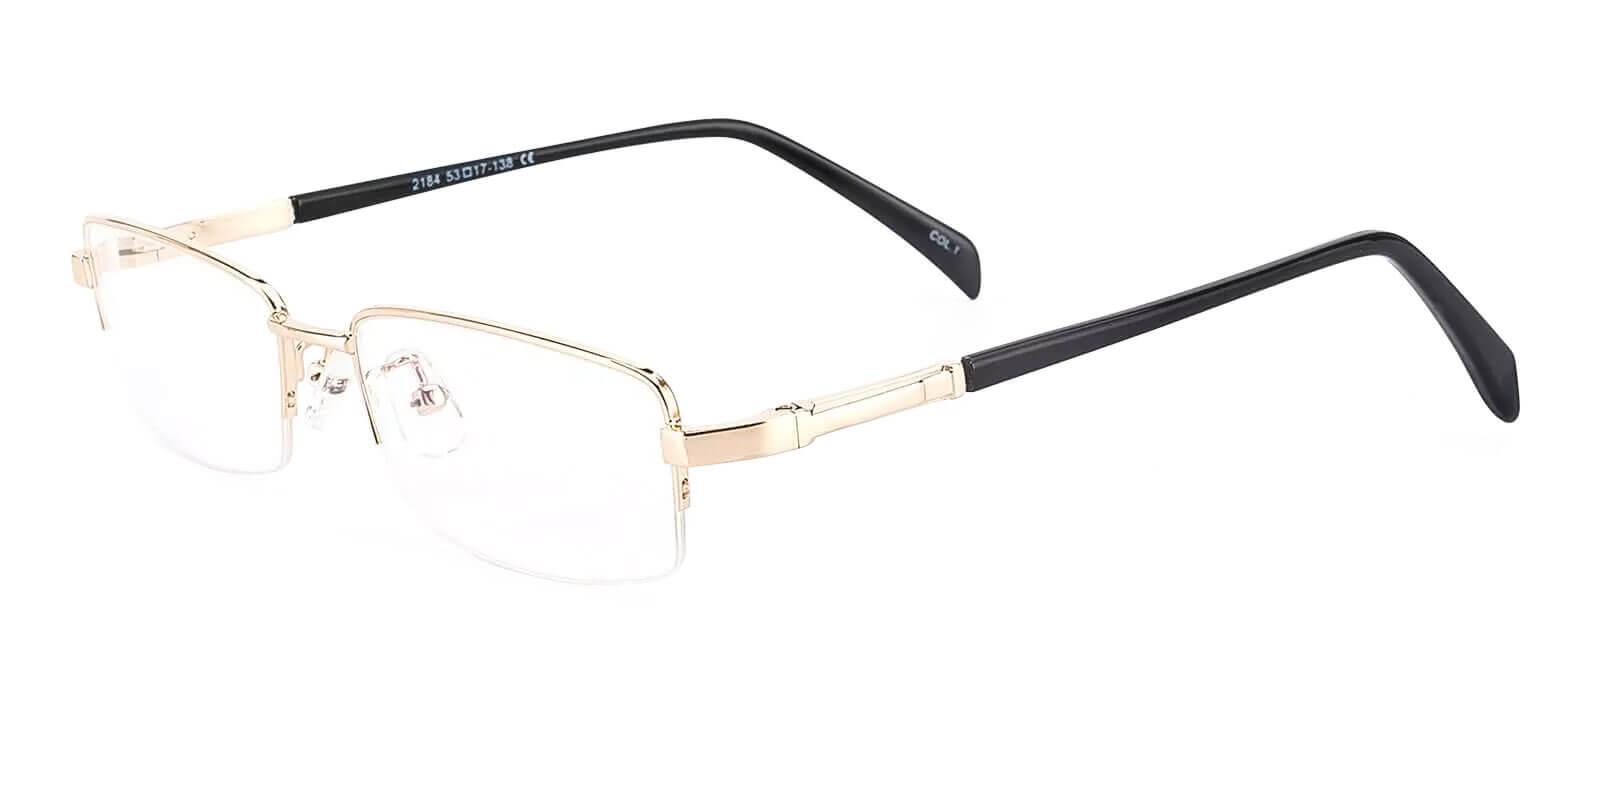 Michael Gold Metal SpringHinges , NosePads , Eyeglasses Frames from ABBE Glasses